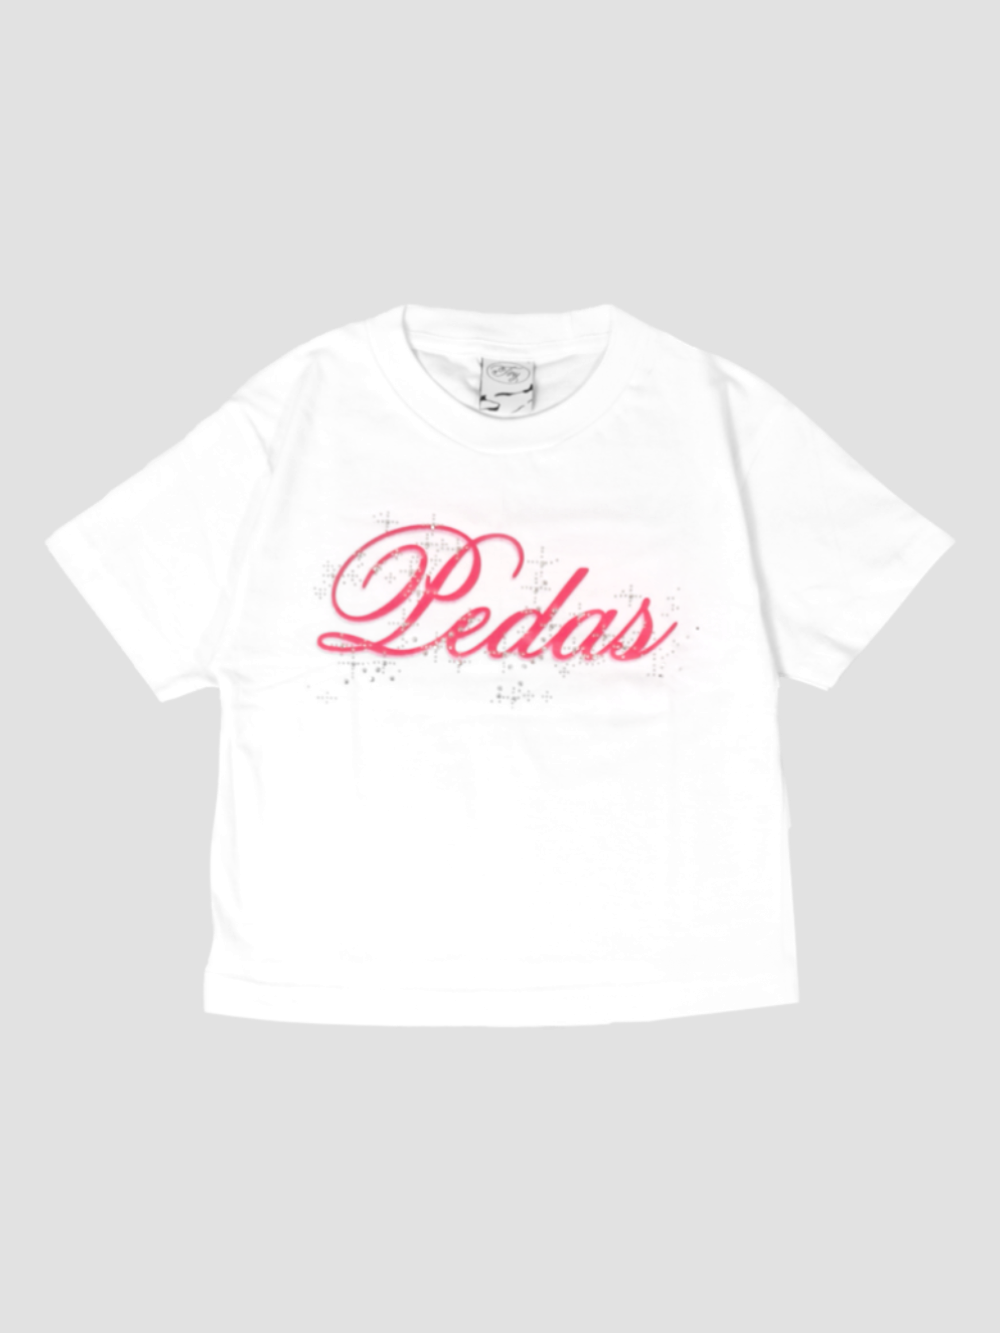 ‘pedas’ baby t-shirt